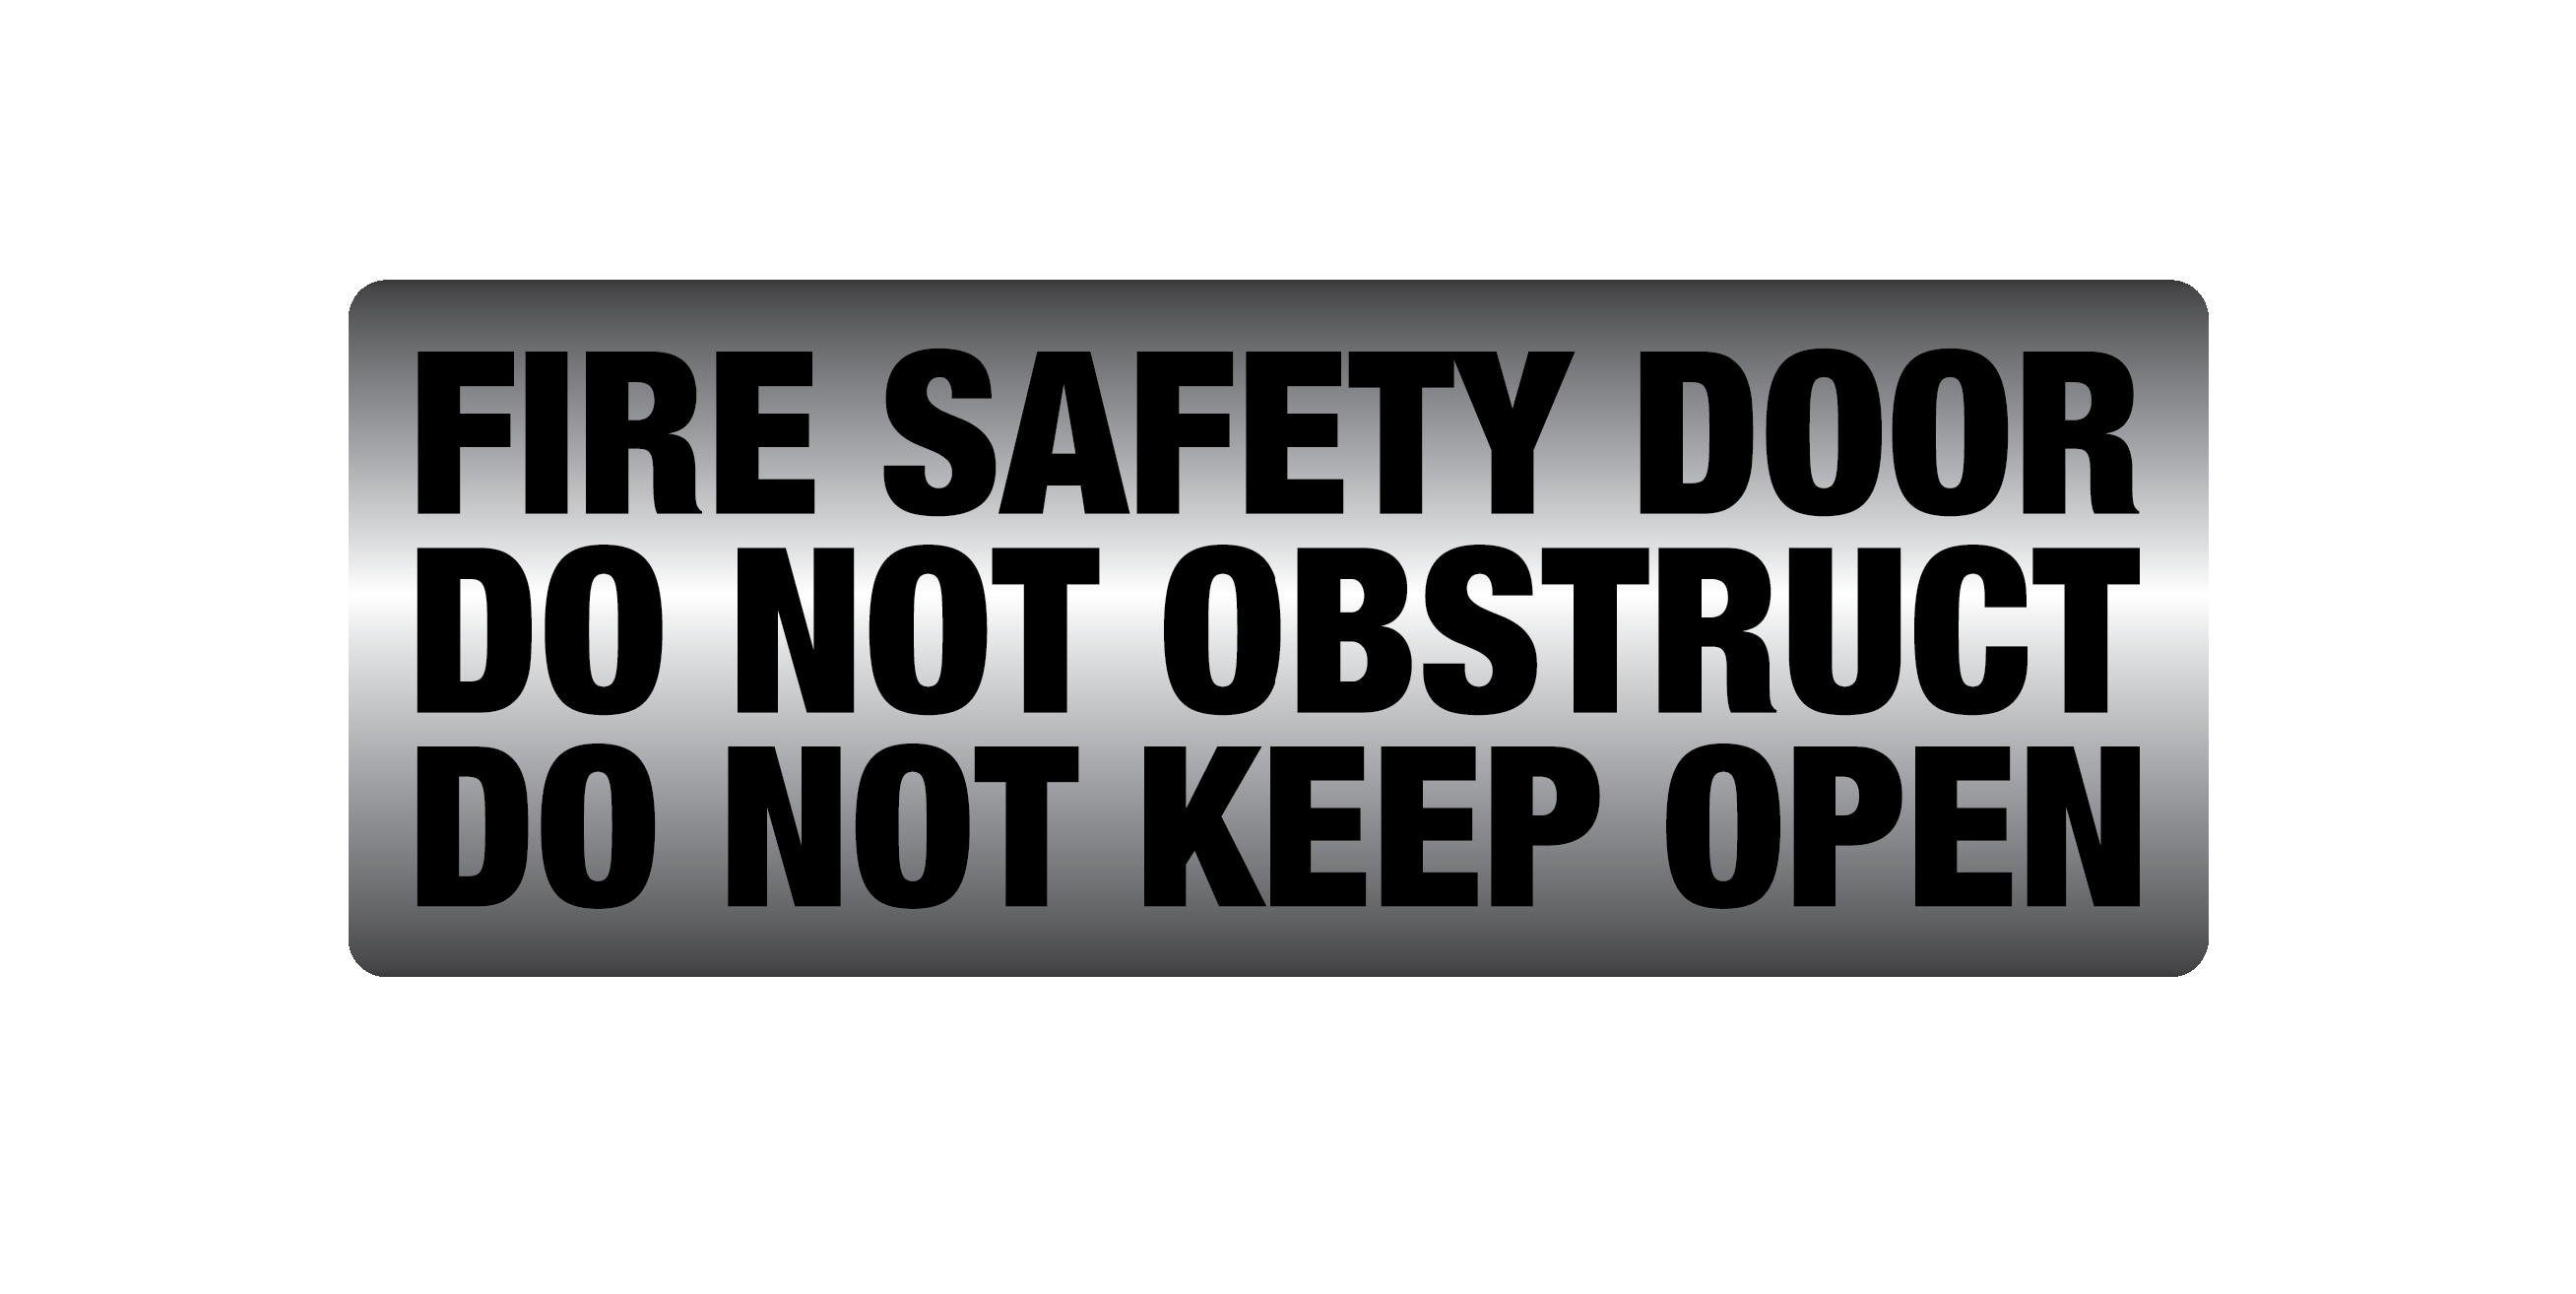 Metal finish PVC Fire safety door do not obstruct do not keep open Sign - Premium  from Firebox - Shop now at Firebox Australia